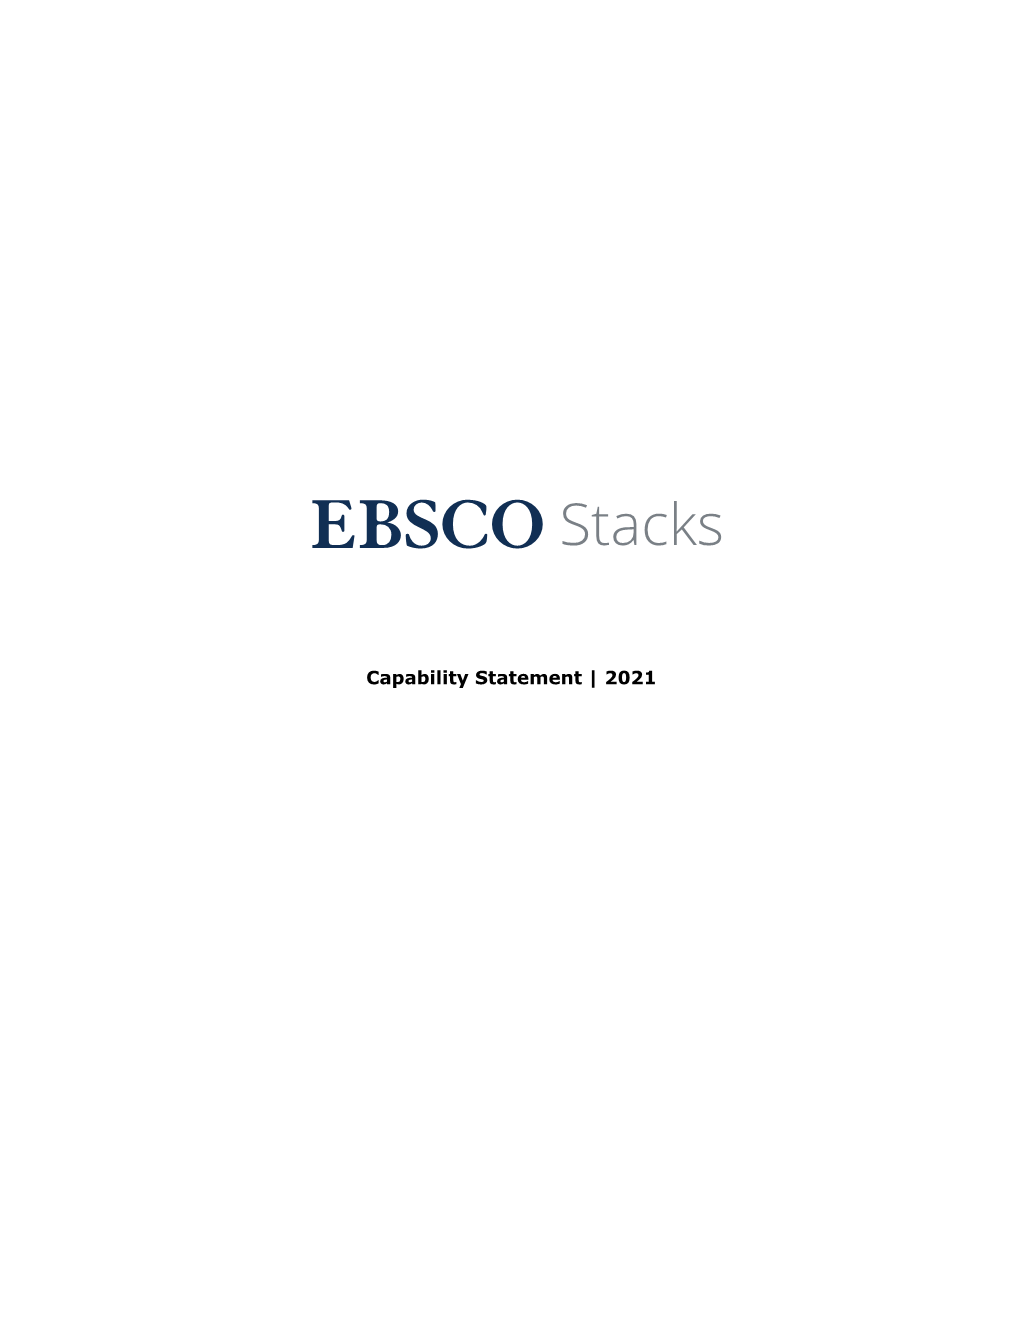 EBSCO Stacks Capability Statement 2021 (February)